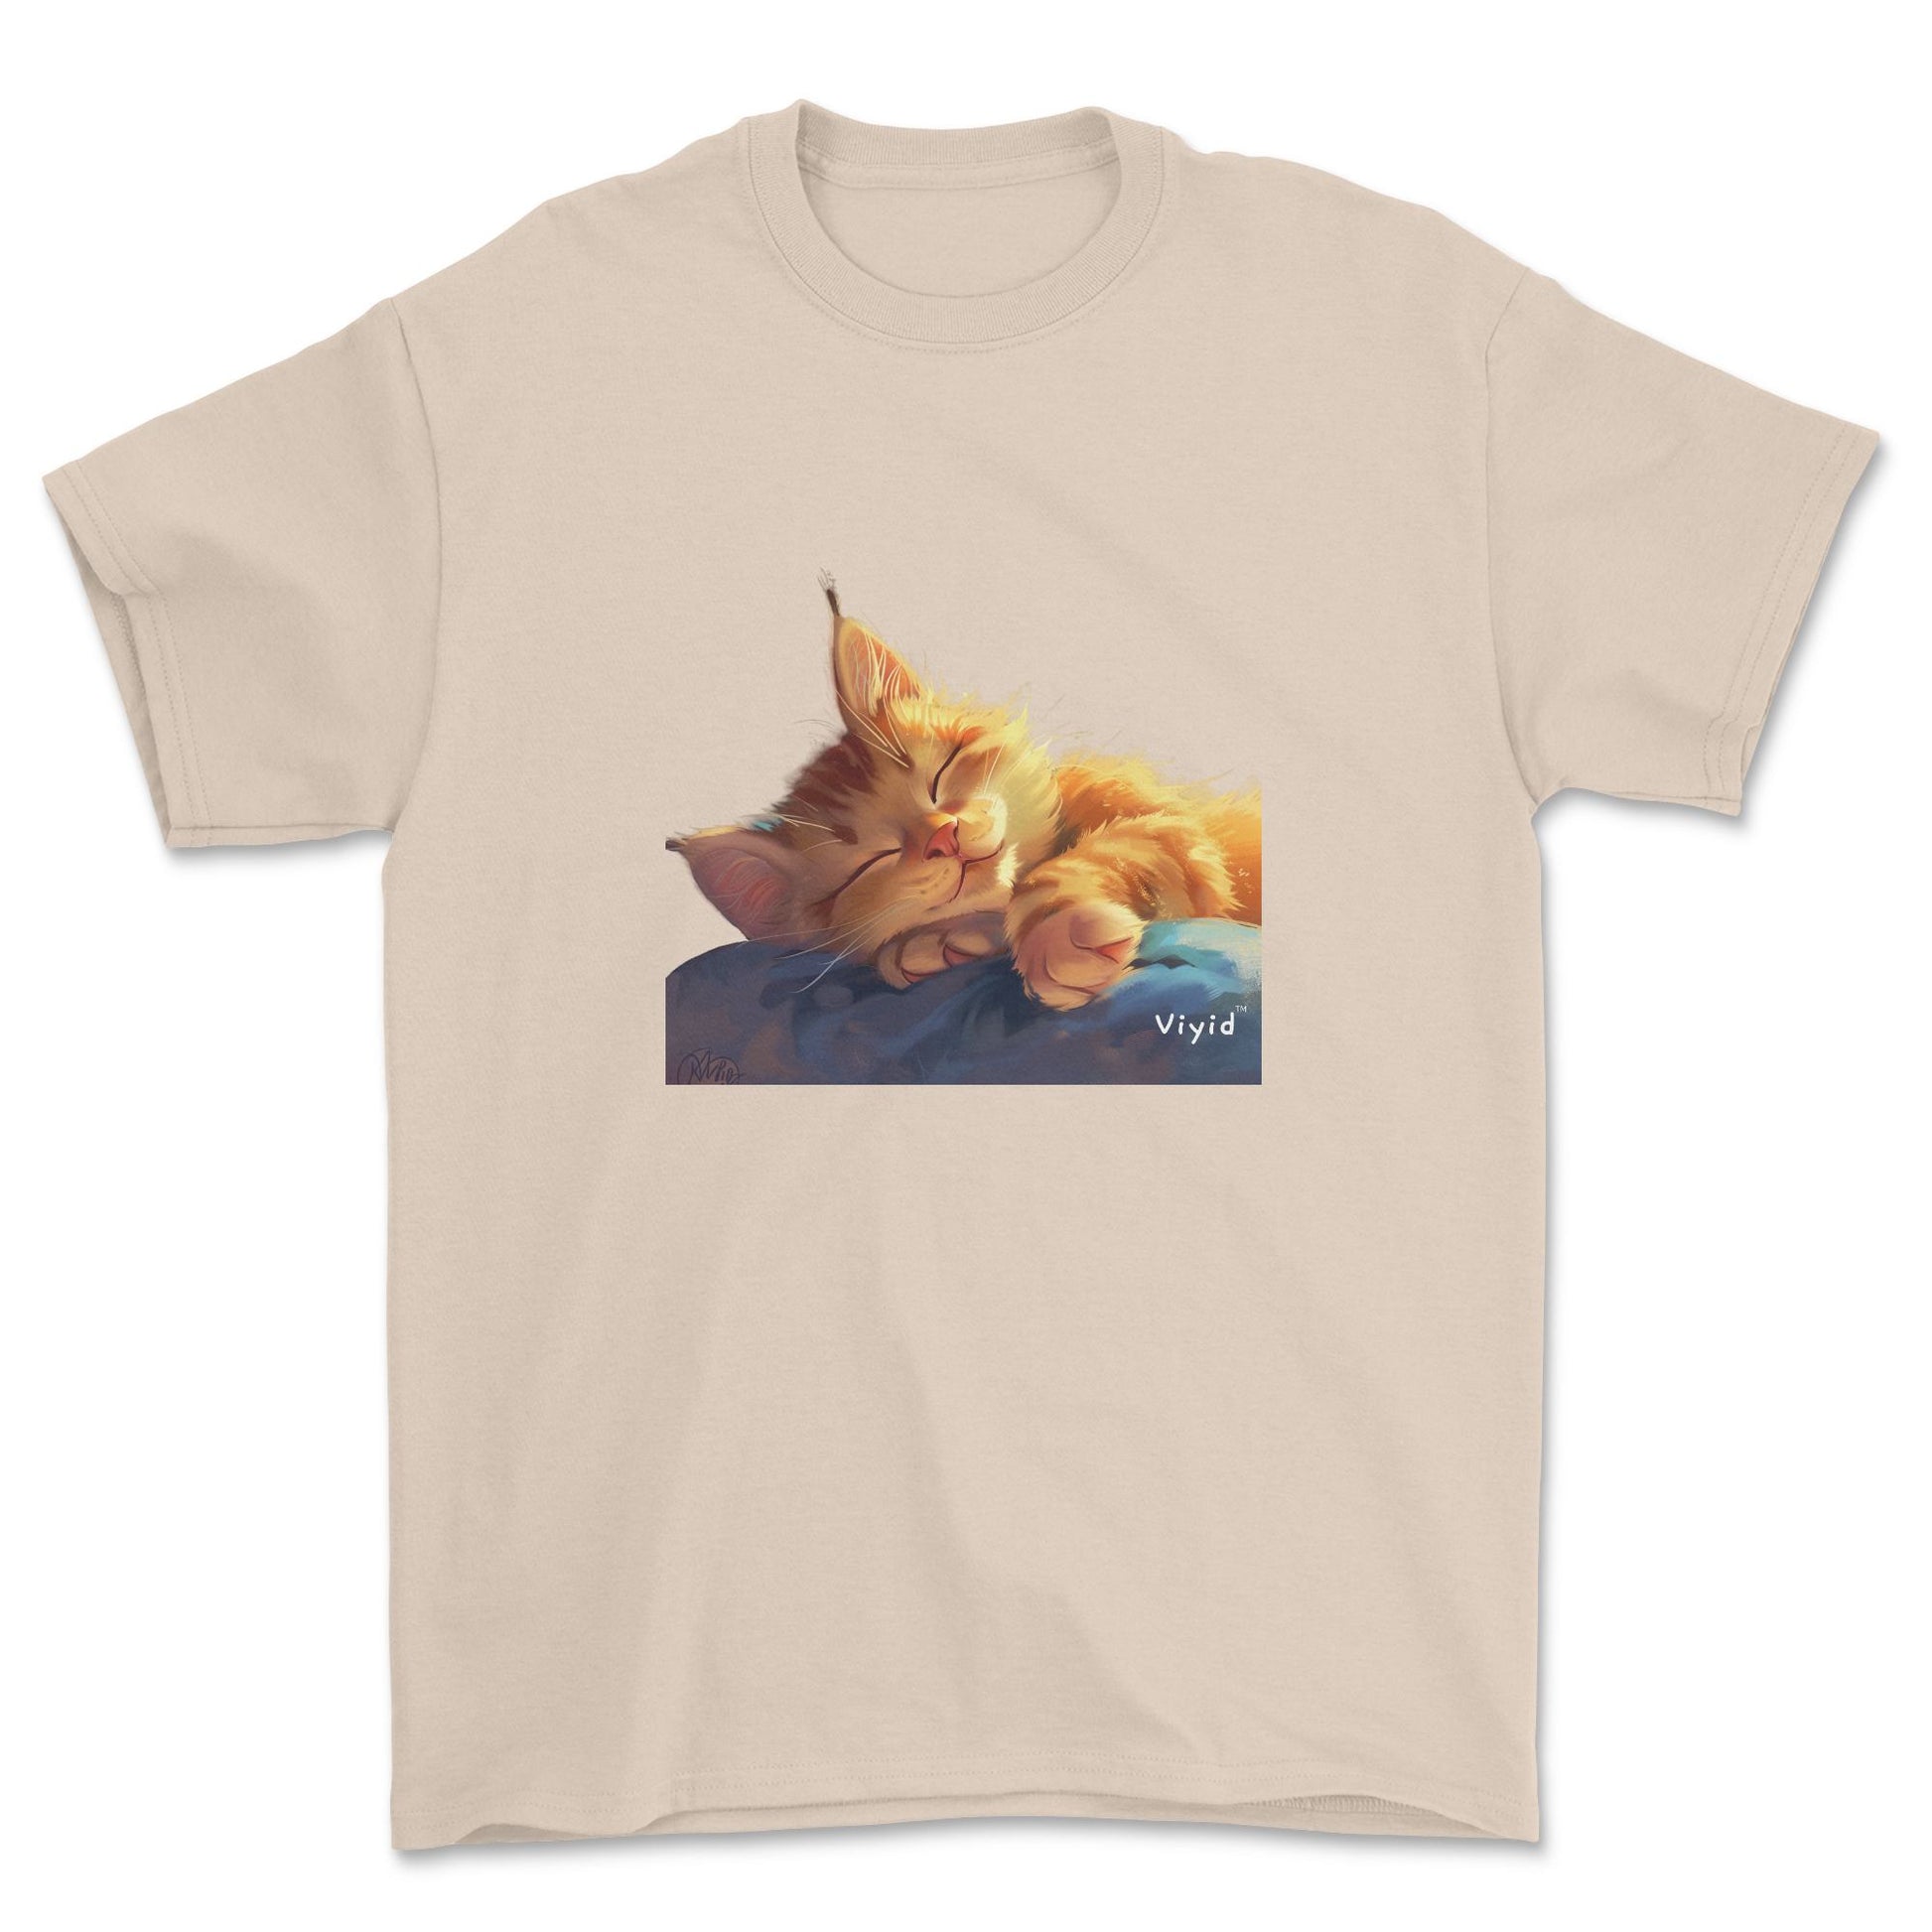 sleeping ginger cat adult t-shirt sand